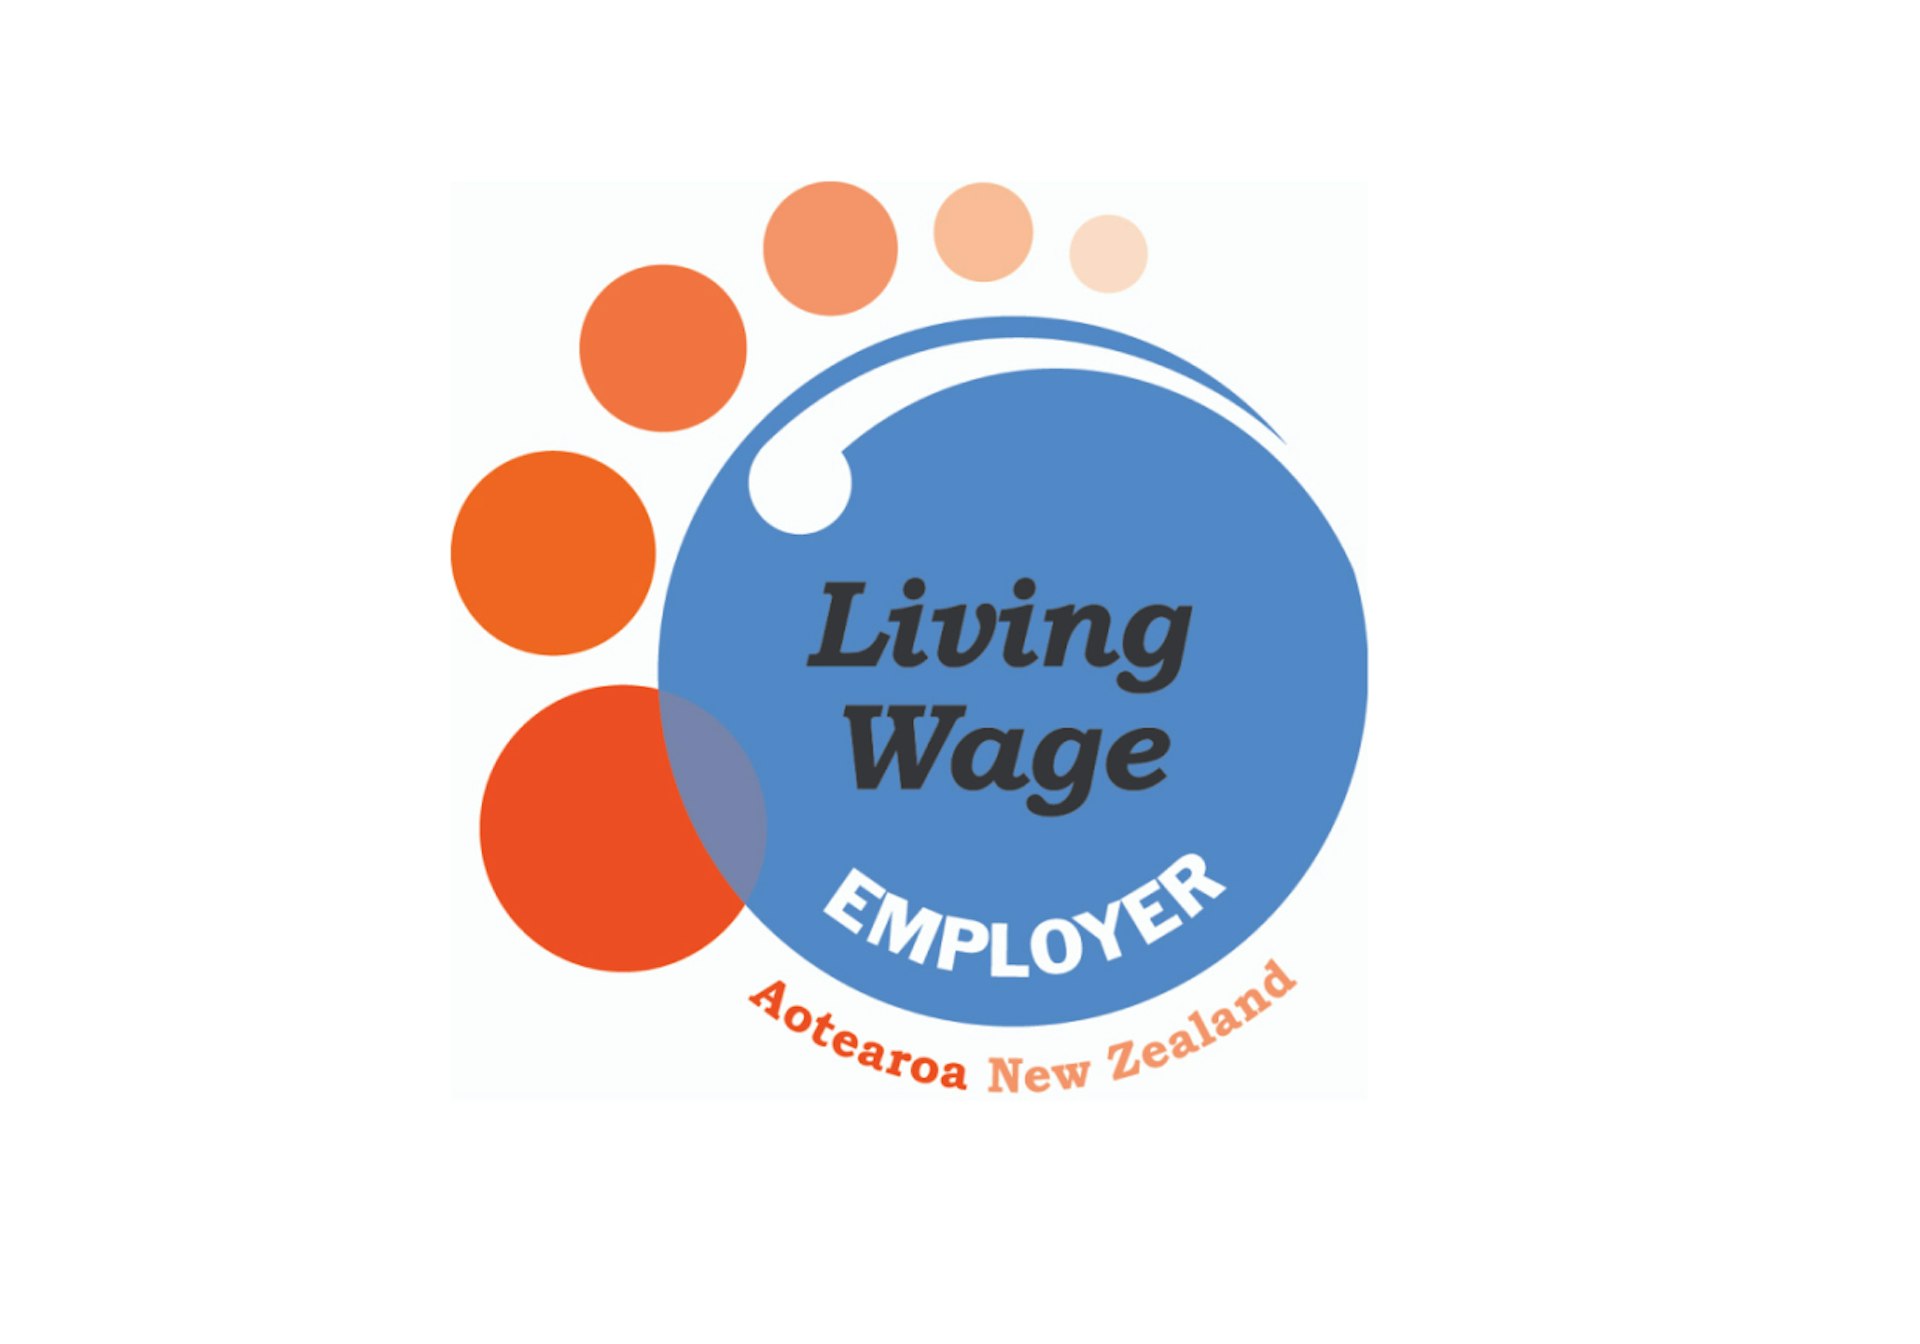 Diversity Awards and Living Wage employer logo.